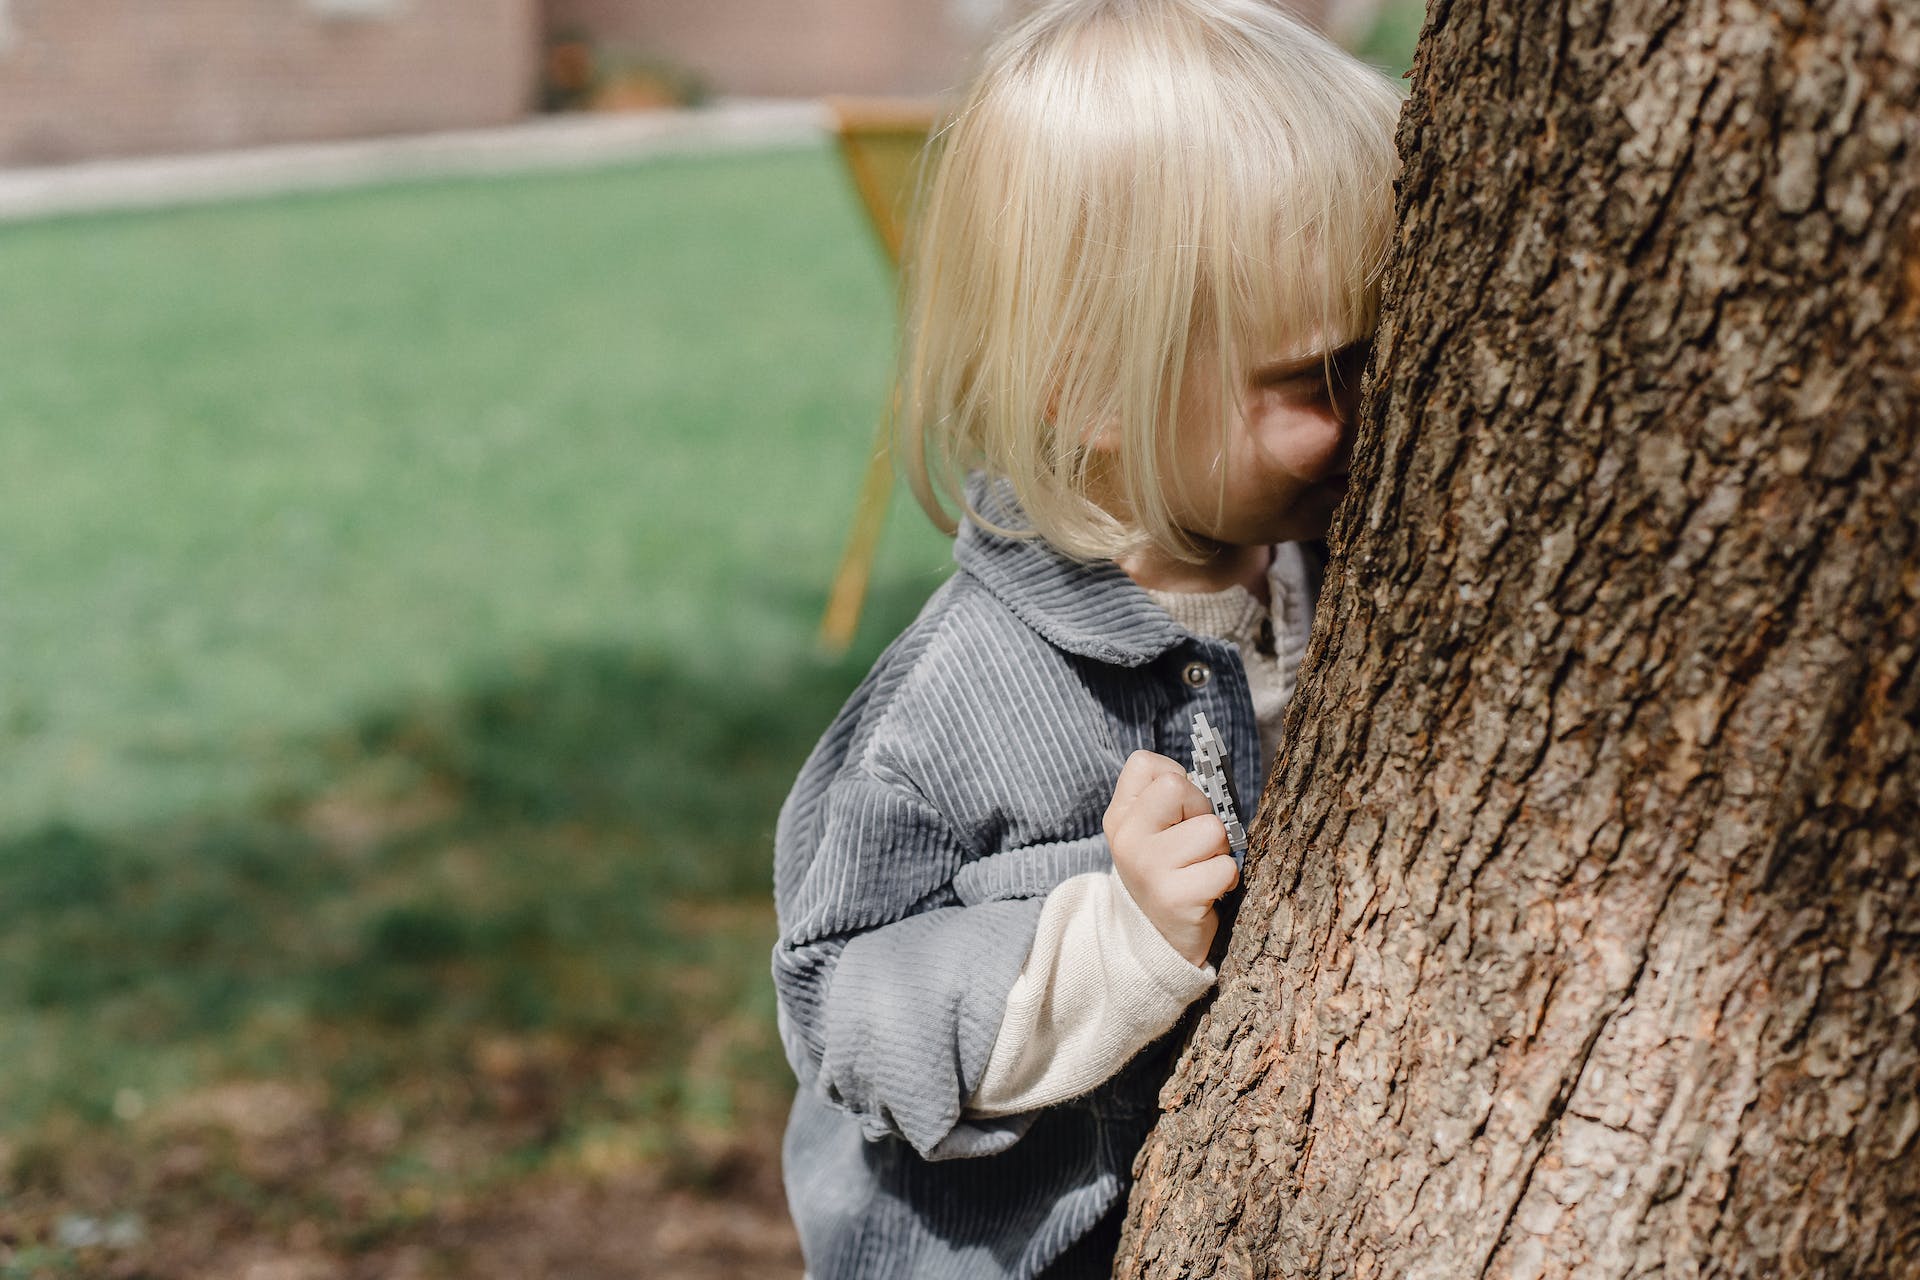 A boy hiding behind a tree | Source: Pexels